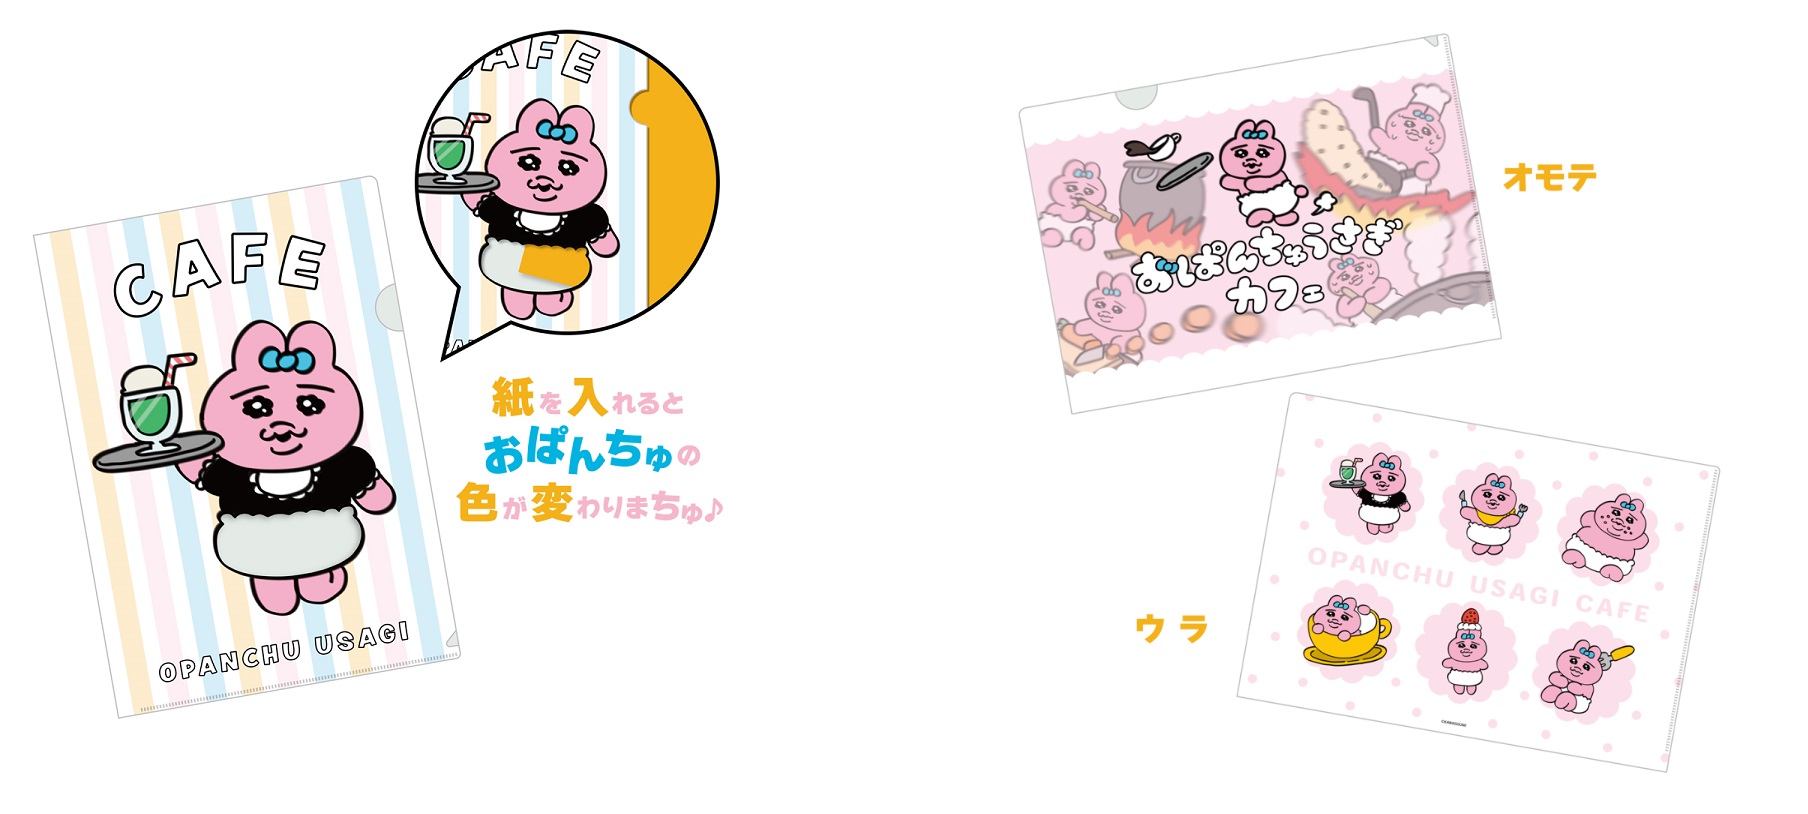 Ryokotomo - 99cdf645 popular line sticker character opanchuusagi inspires cafes in tokyo and